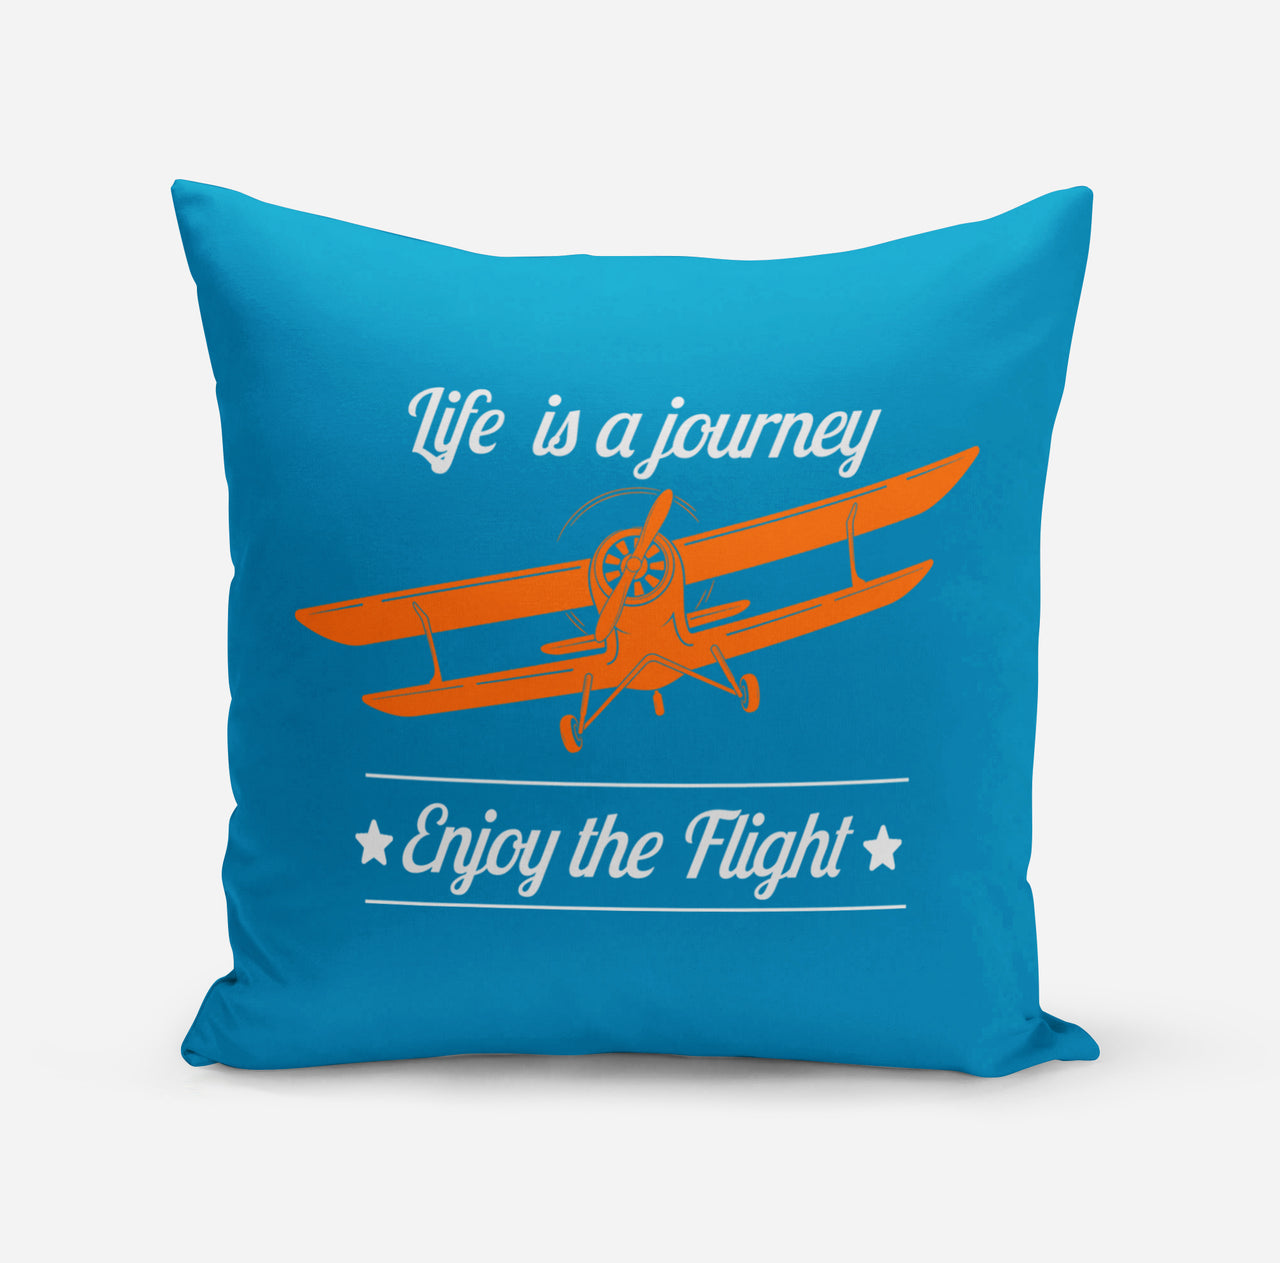 Life is a journey Enjoy the Flight Designed Pillows